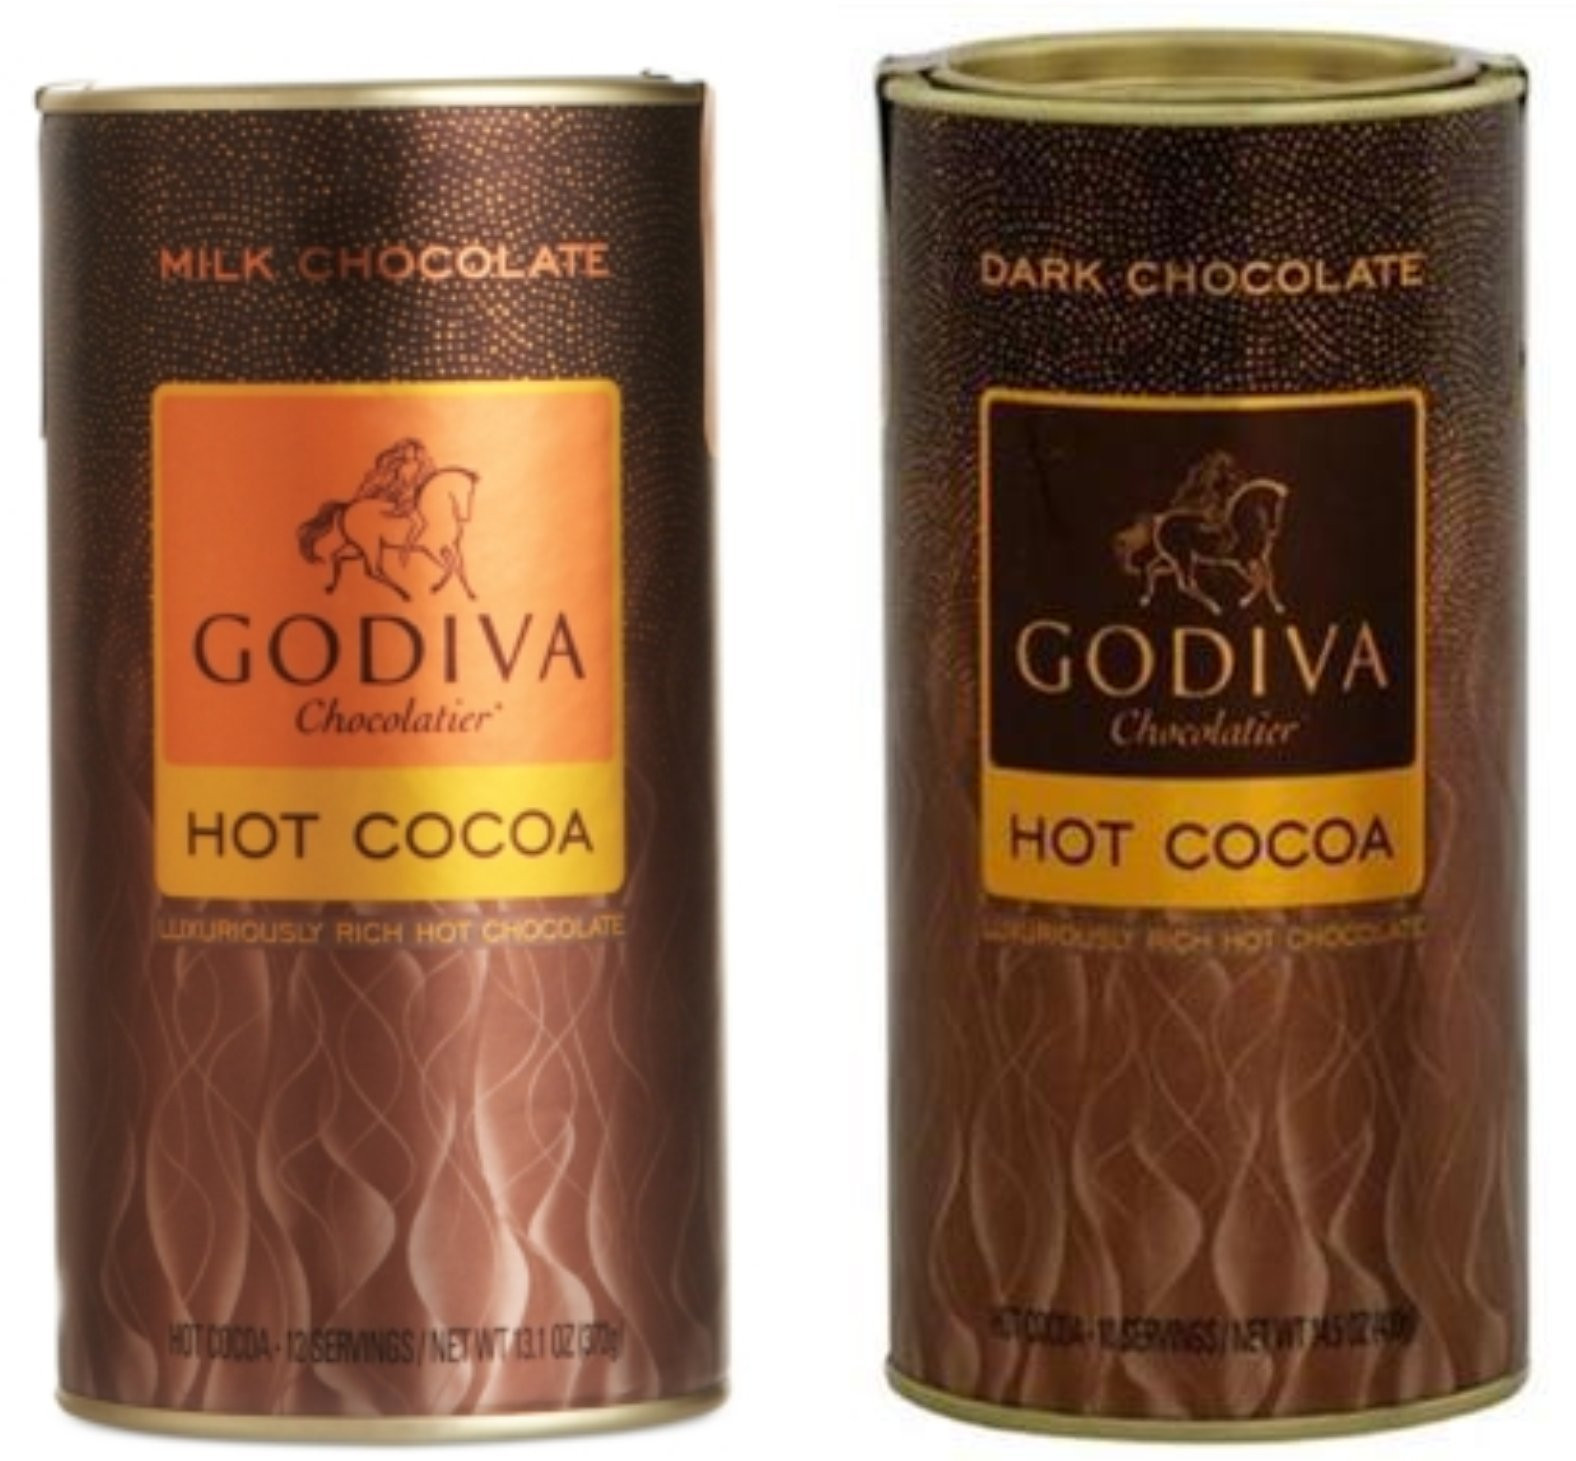 Easy Godiva Hot Chocolate to Make at Home